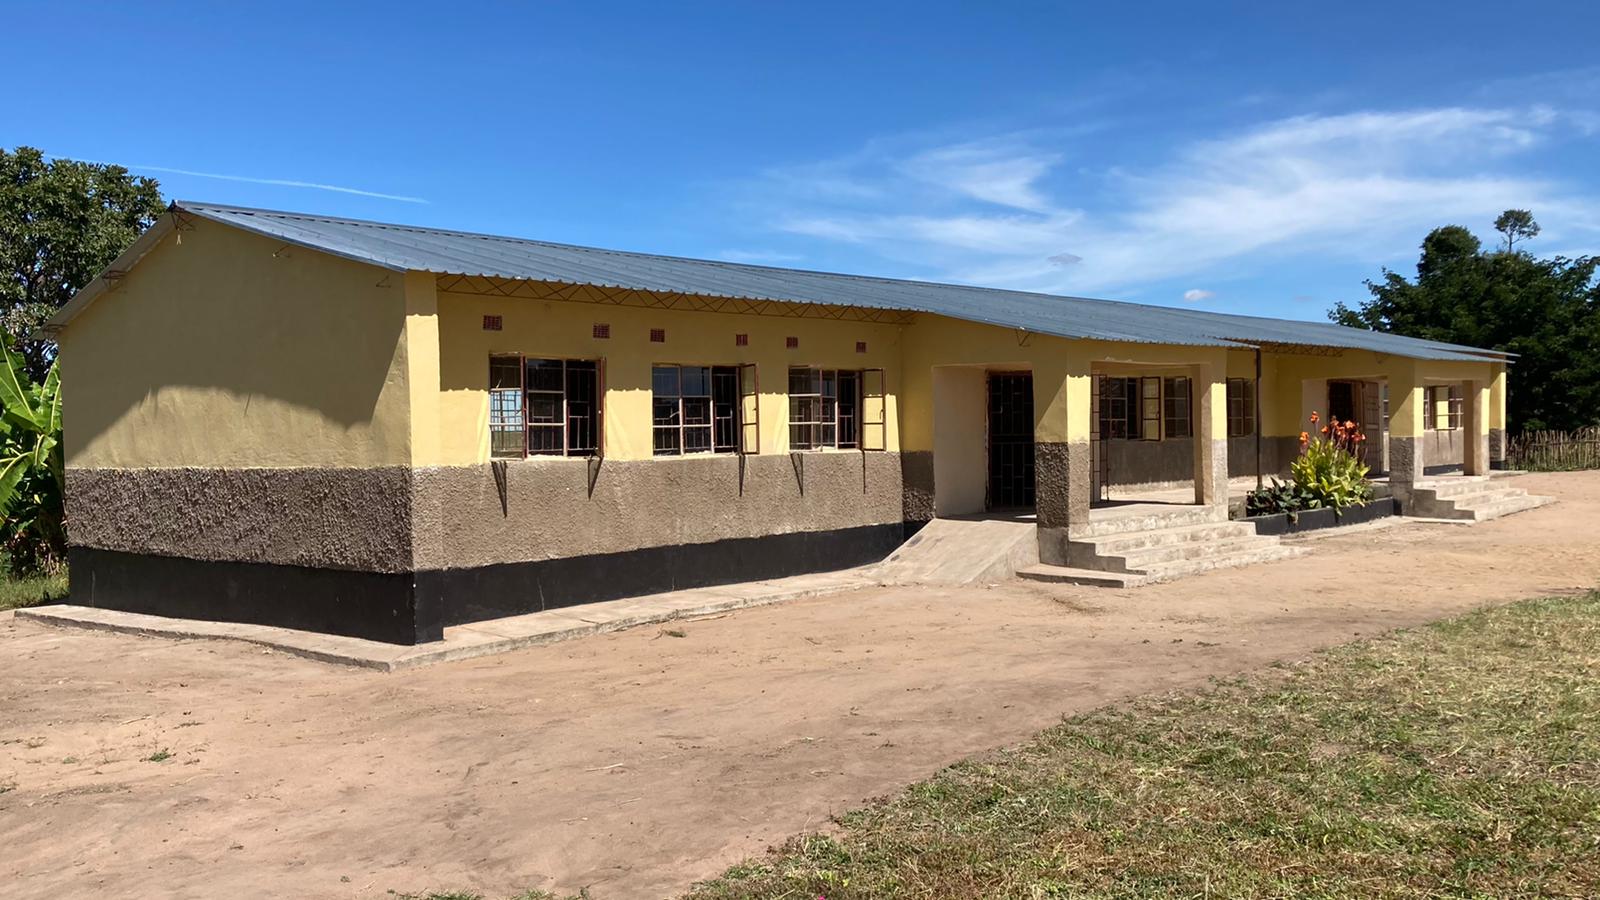 Chikulu Primary 1×3 Classroom Block